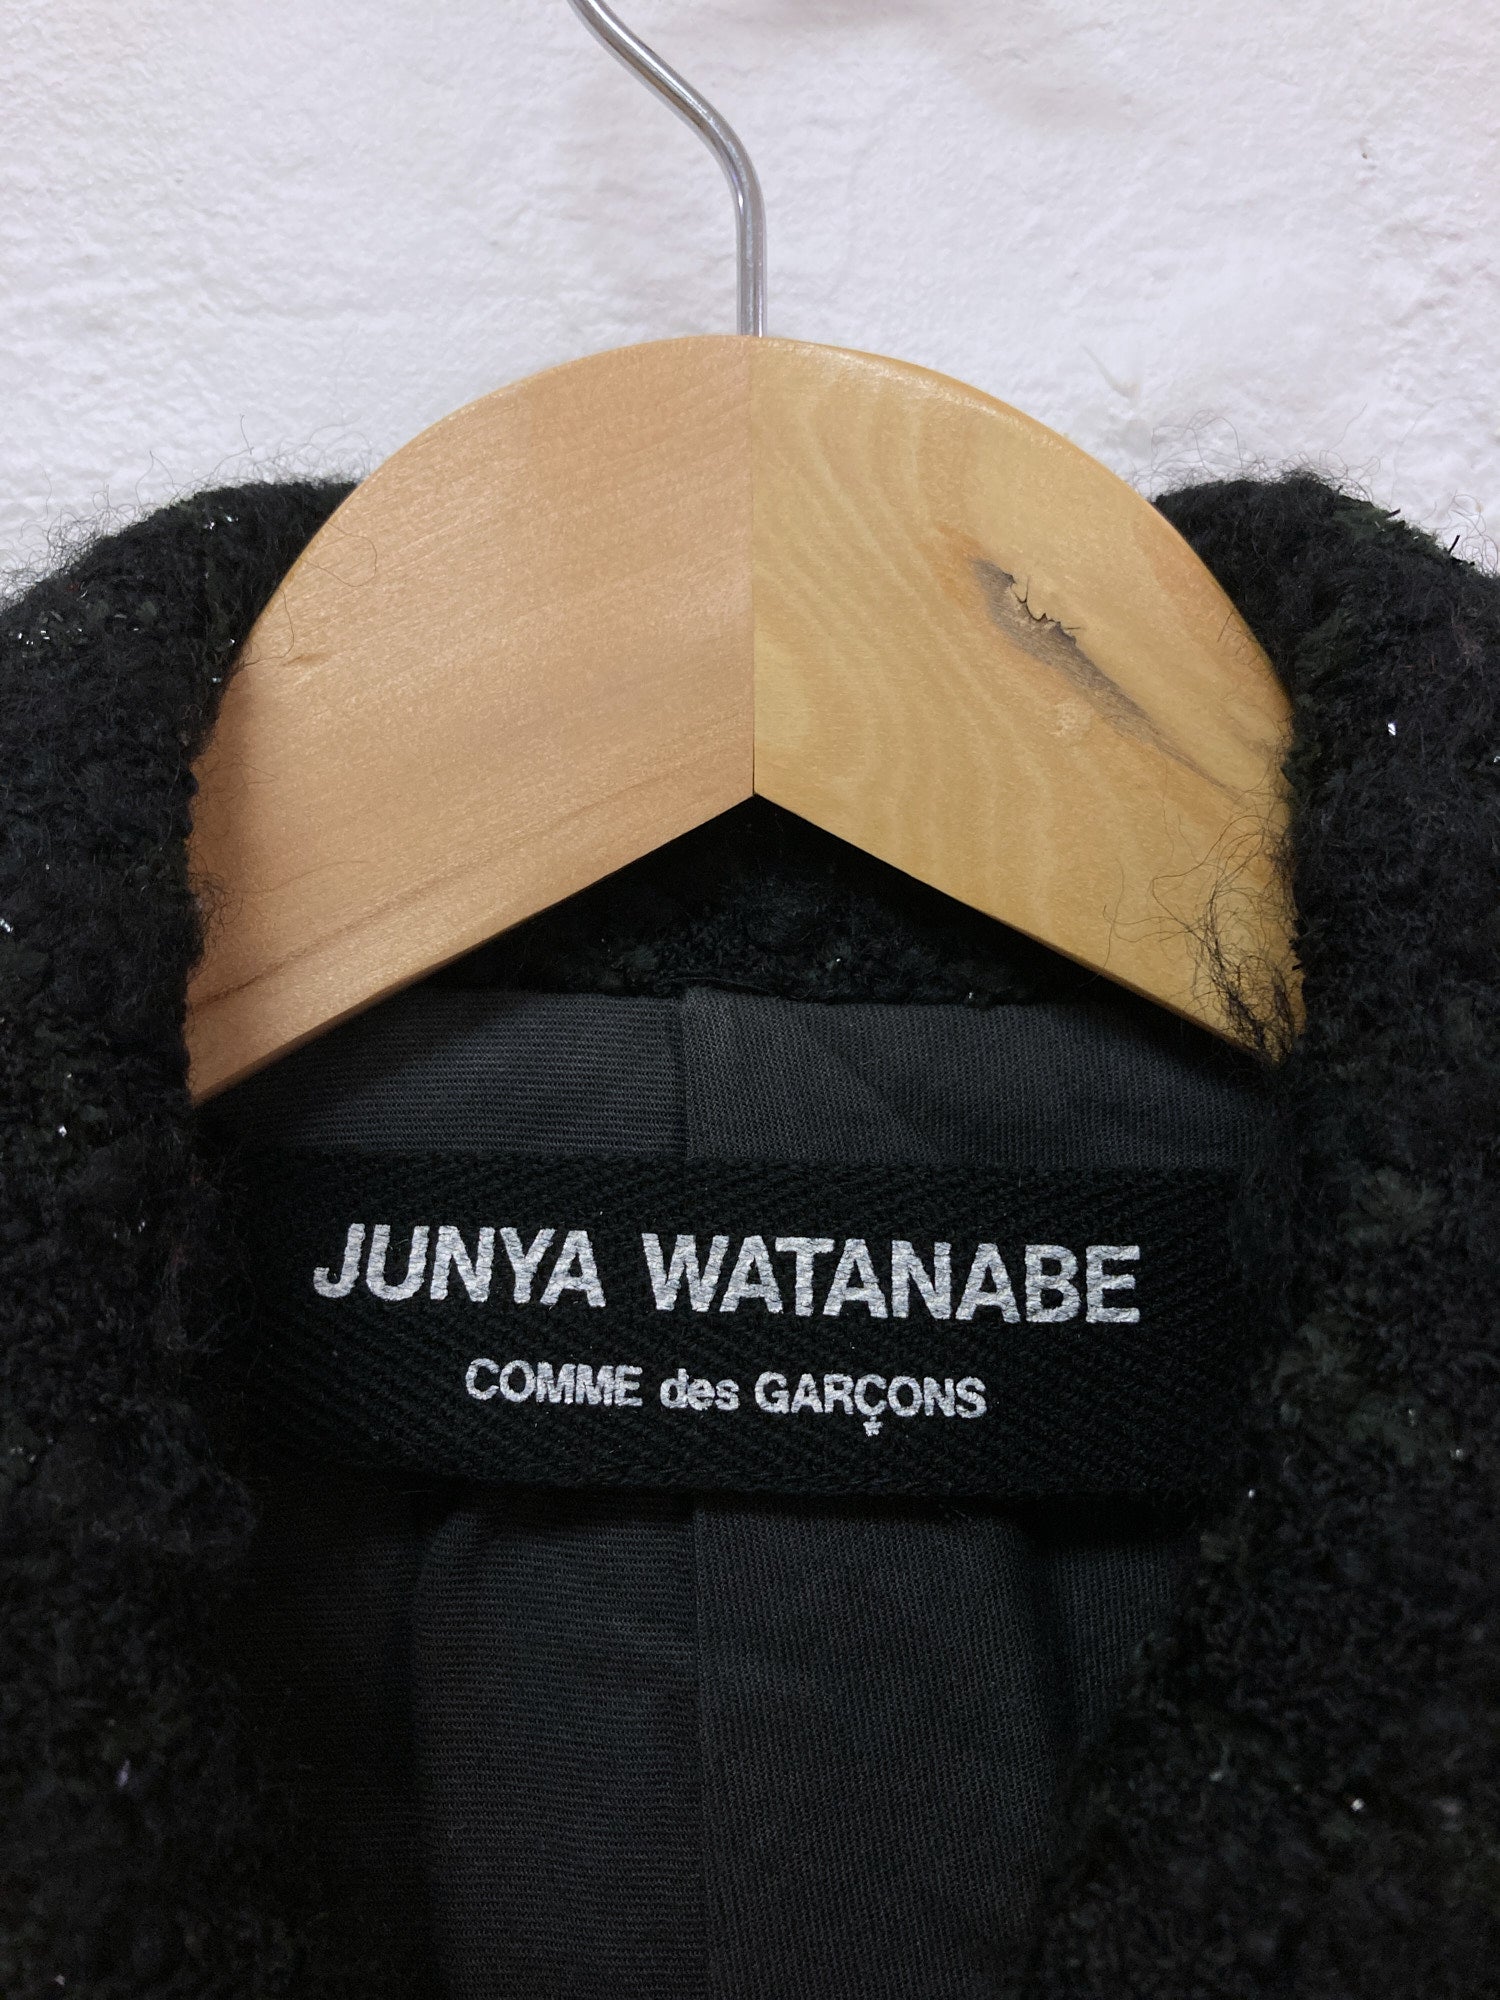 Junya Watanabe Comme des Garcons black wool boucle unfinished hem pea coat